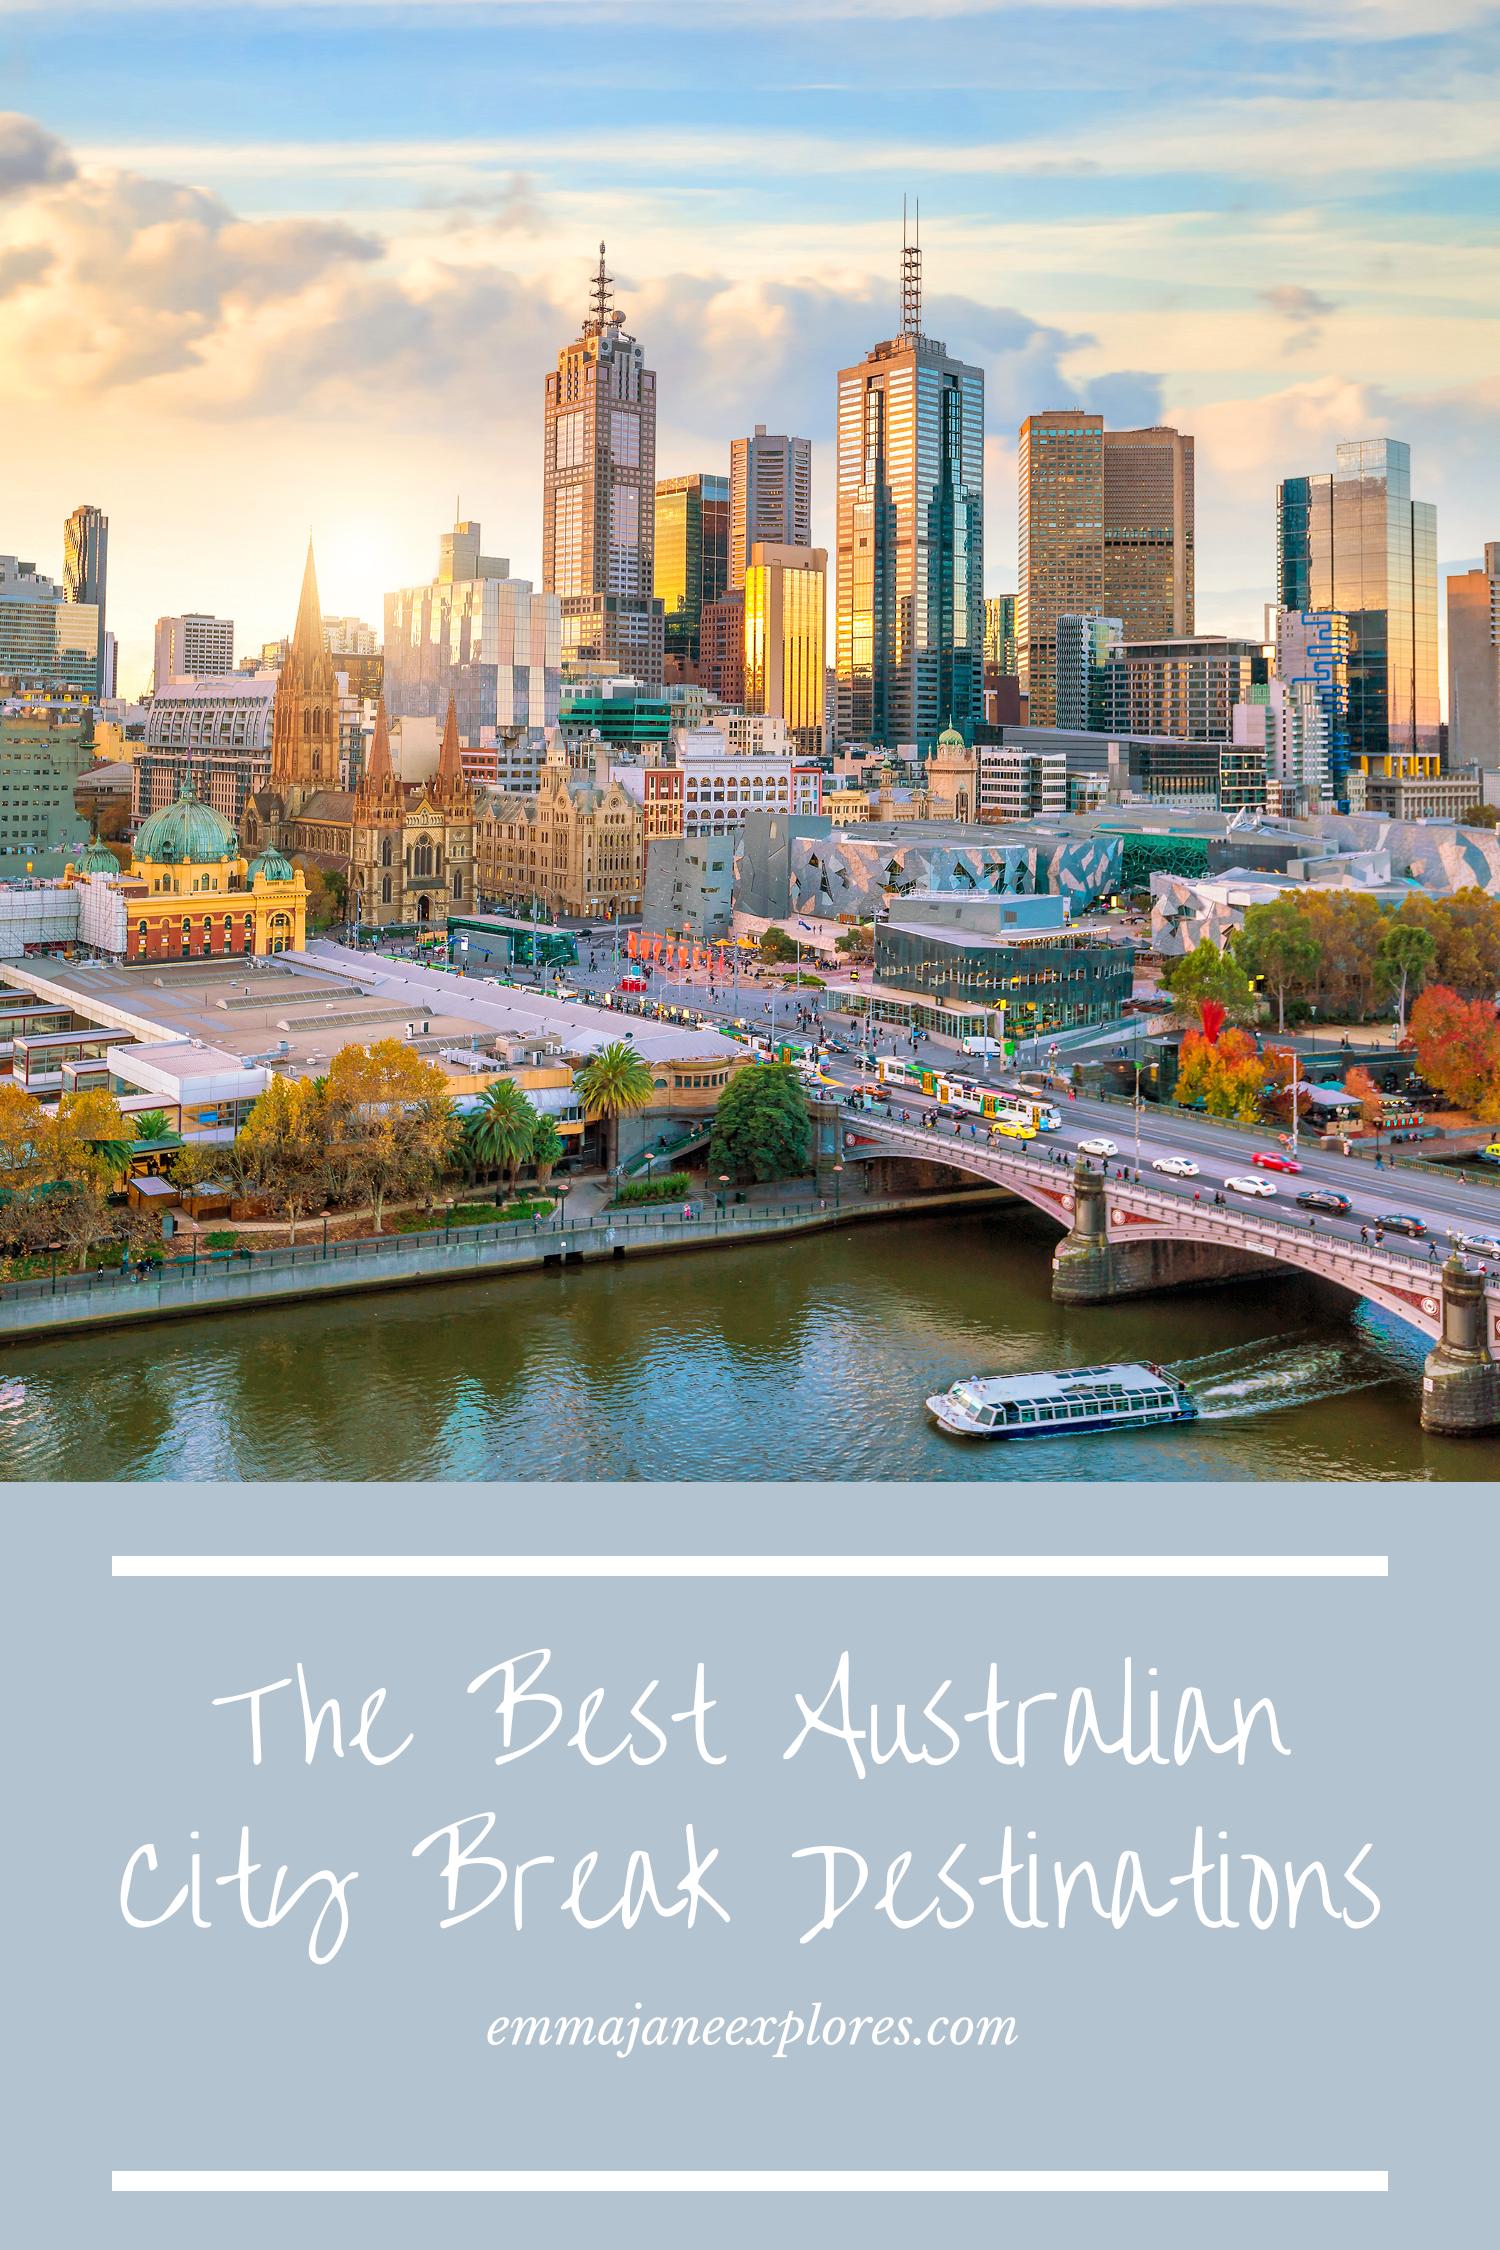 The Best City Breaks In Australia - Emma Jane Explores